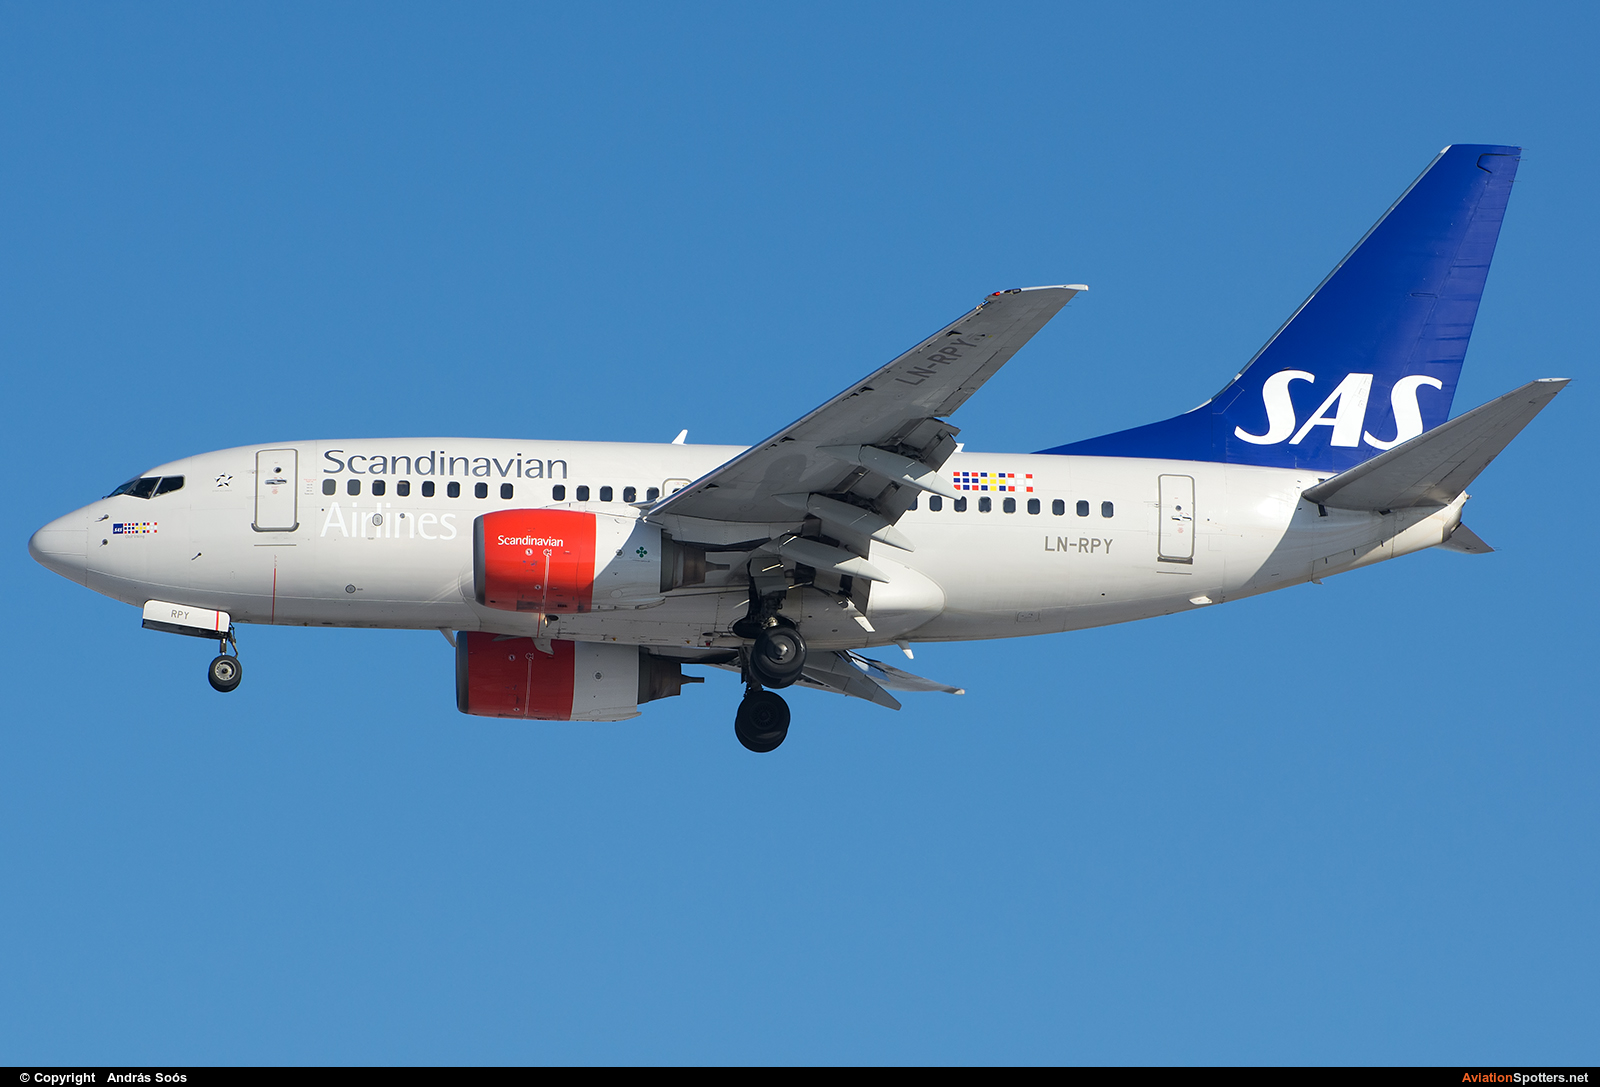 SAS - Scandinavian Airlines  -  737-600  (LN-RPY) By András Soós (sas1965)